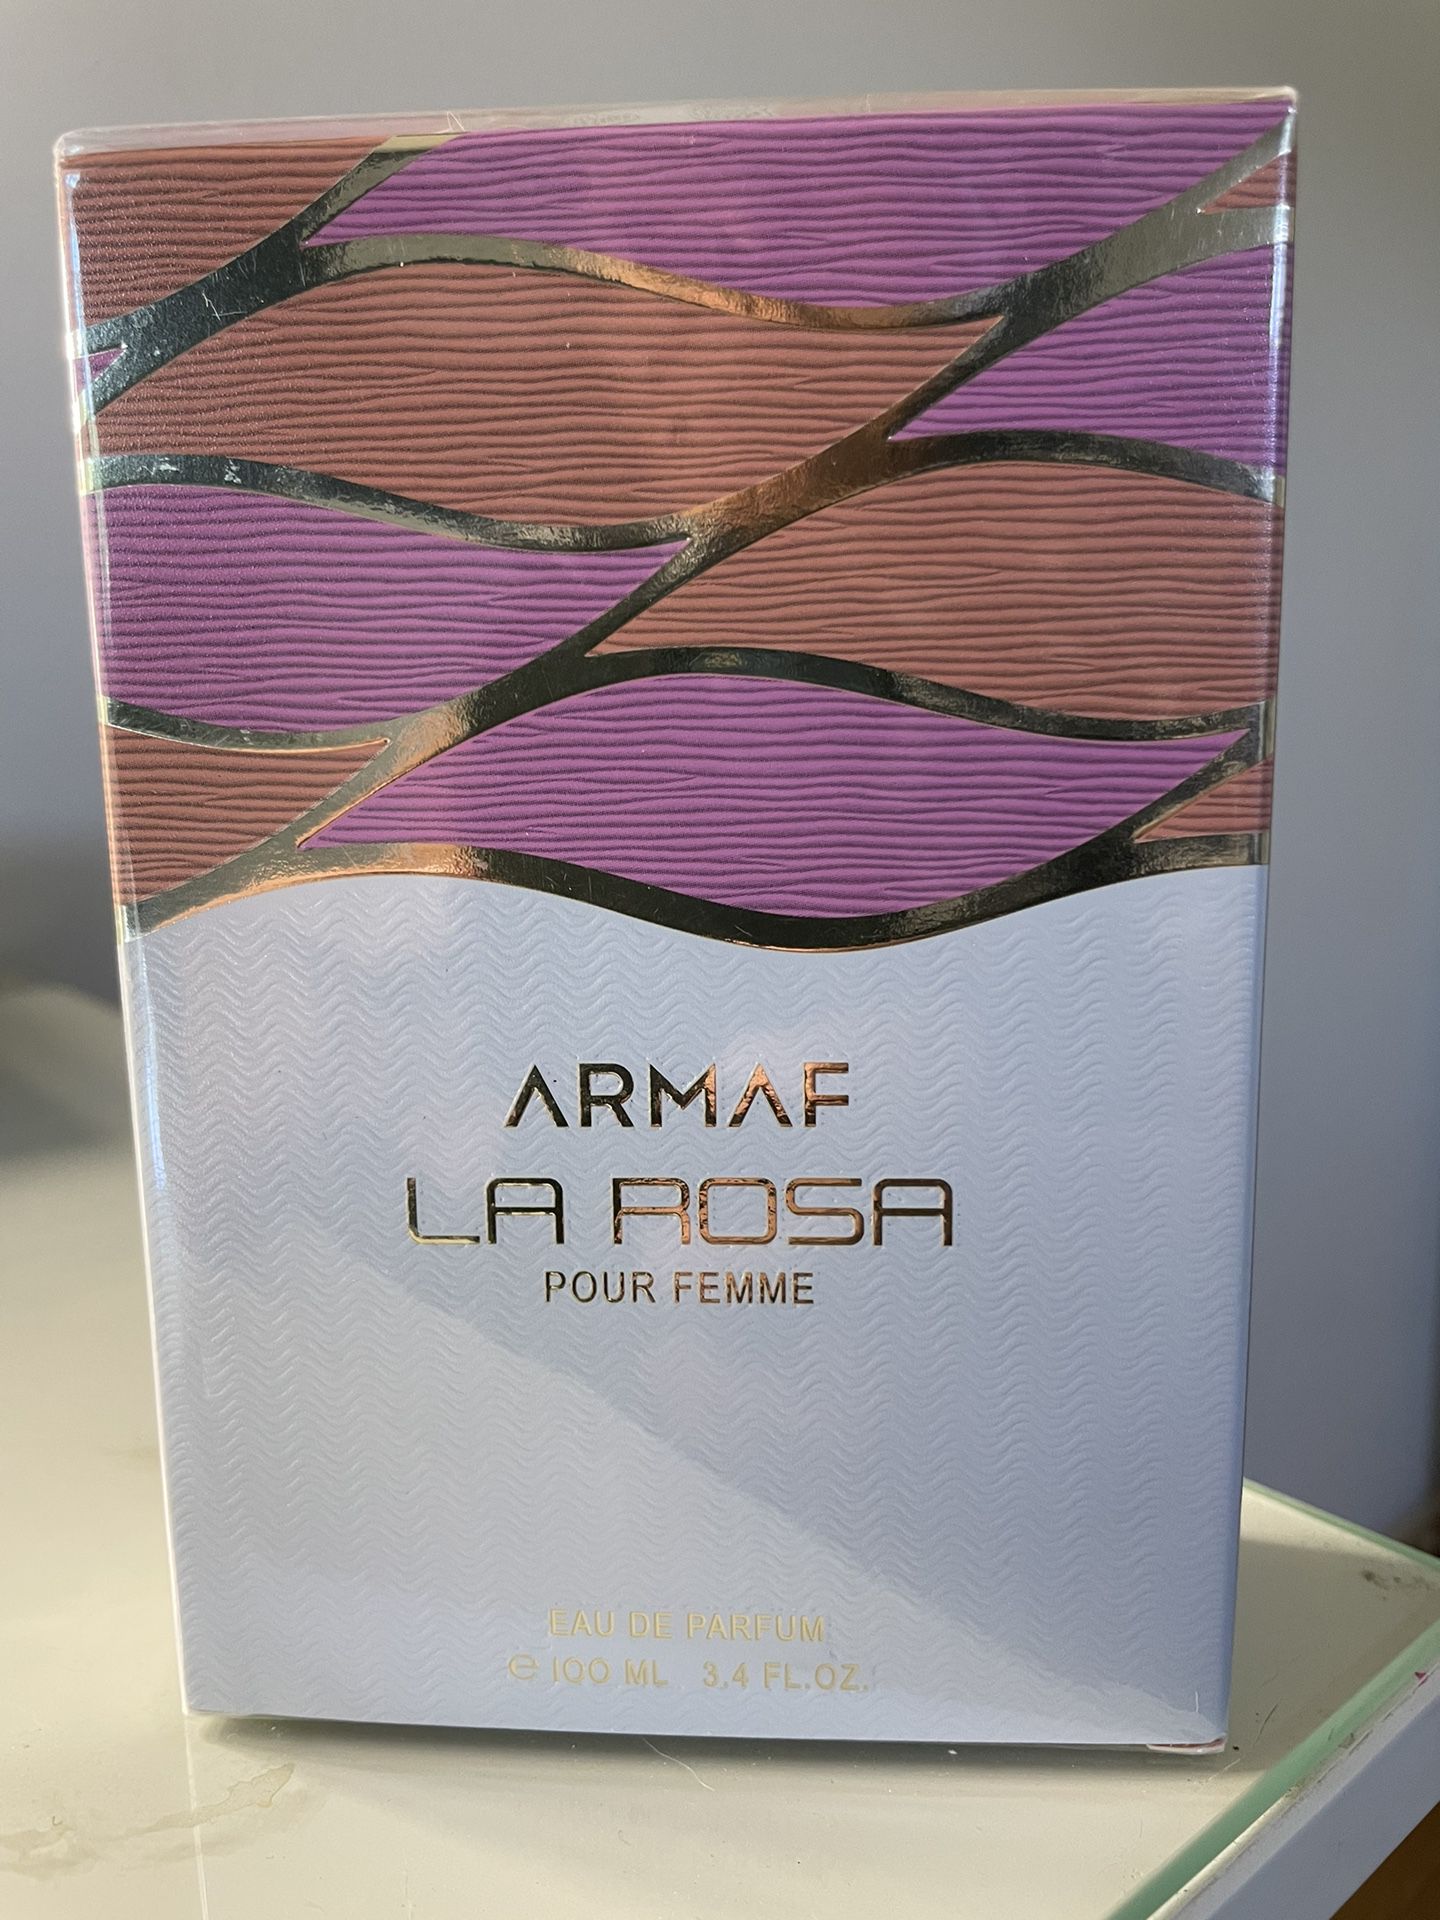 Armaf La Rosa for Women (Sealed) Perfume